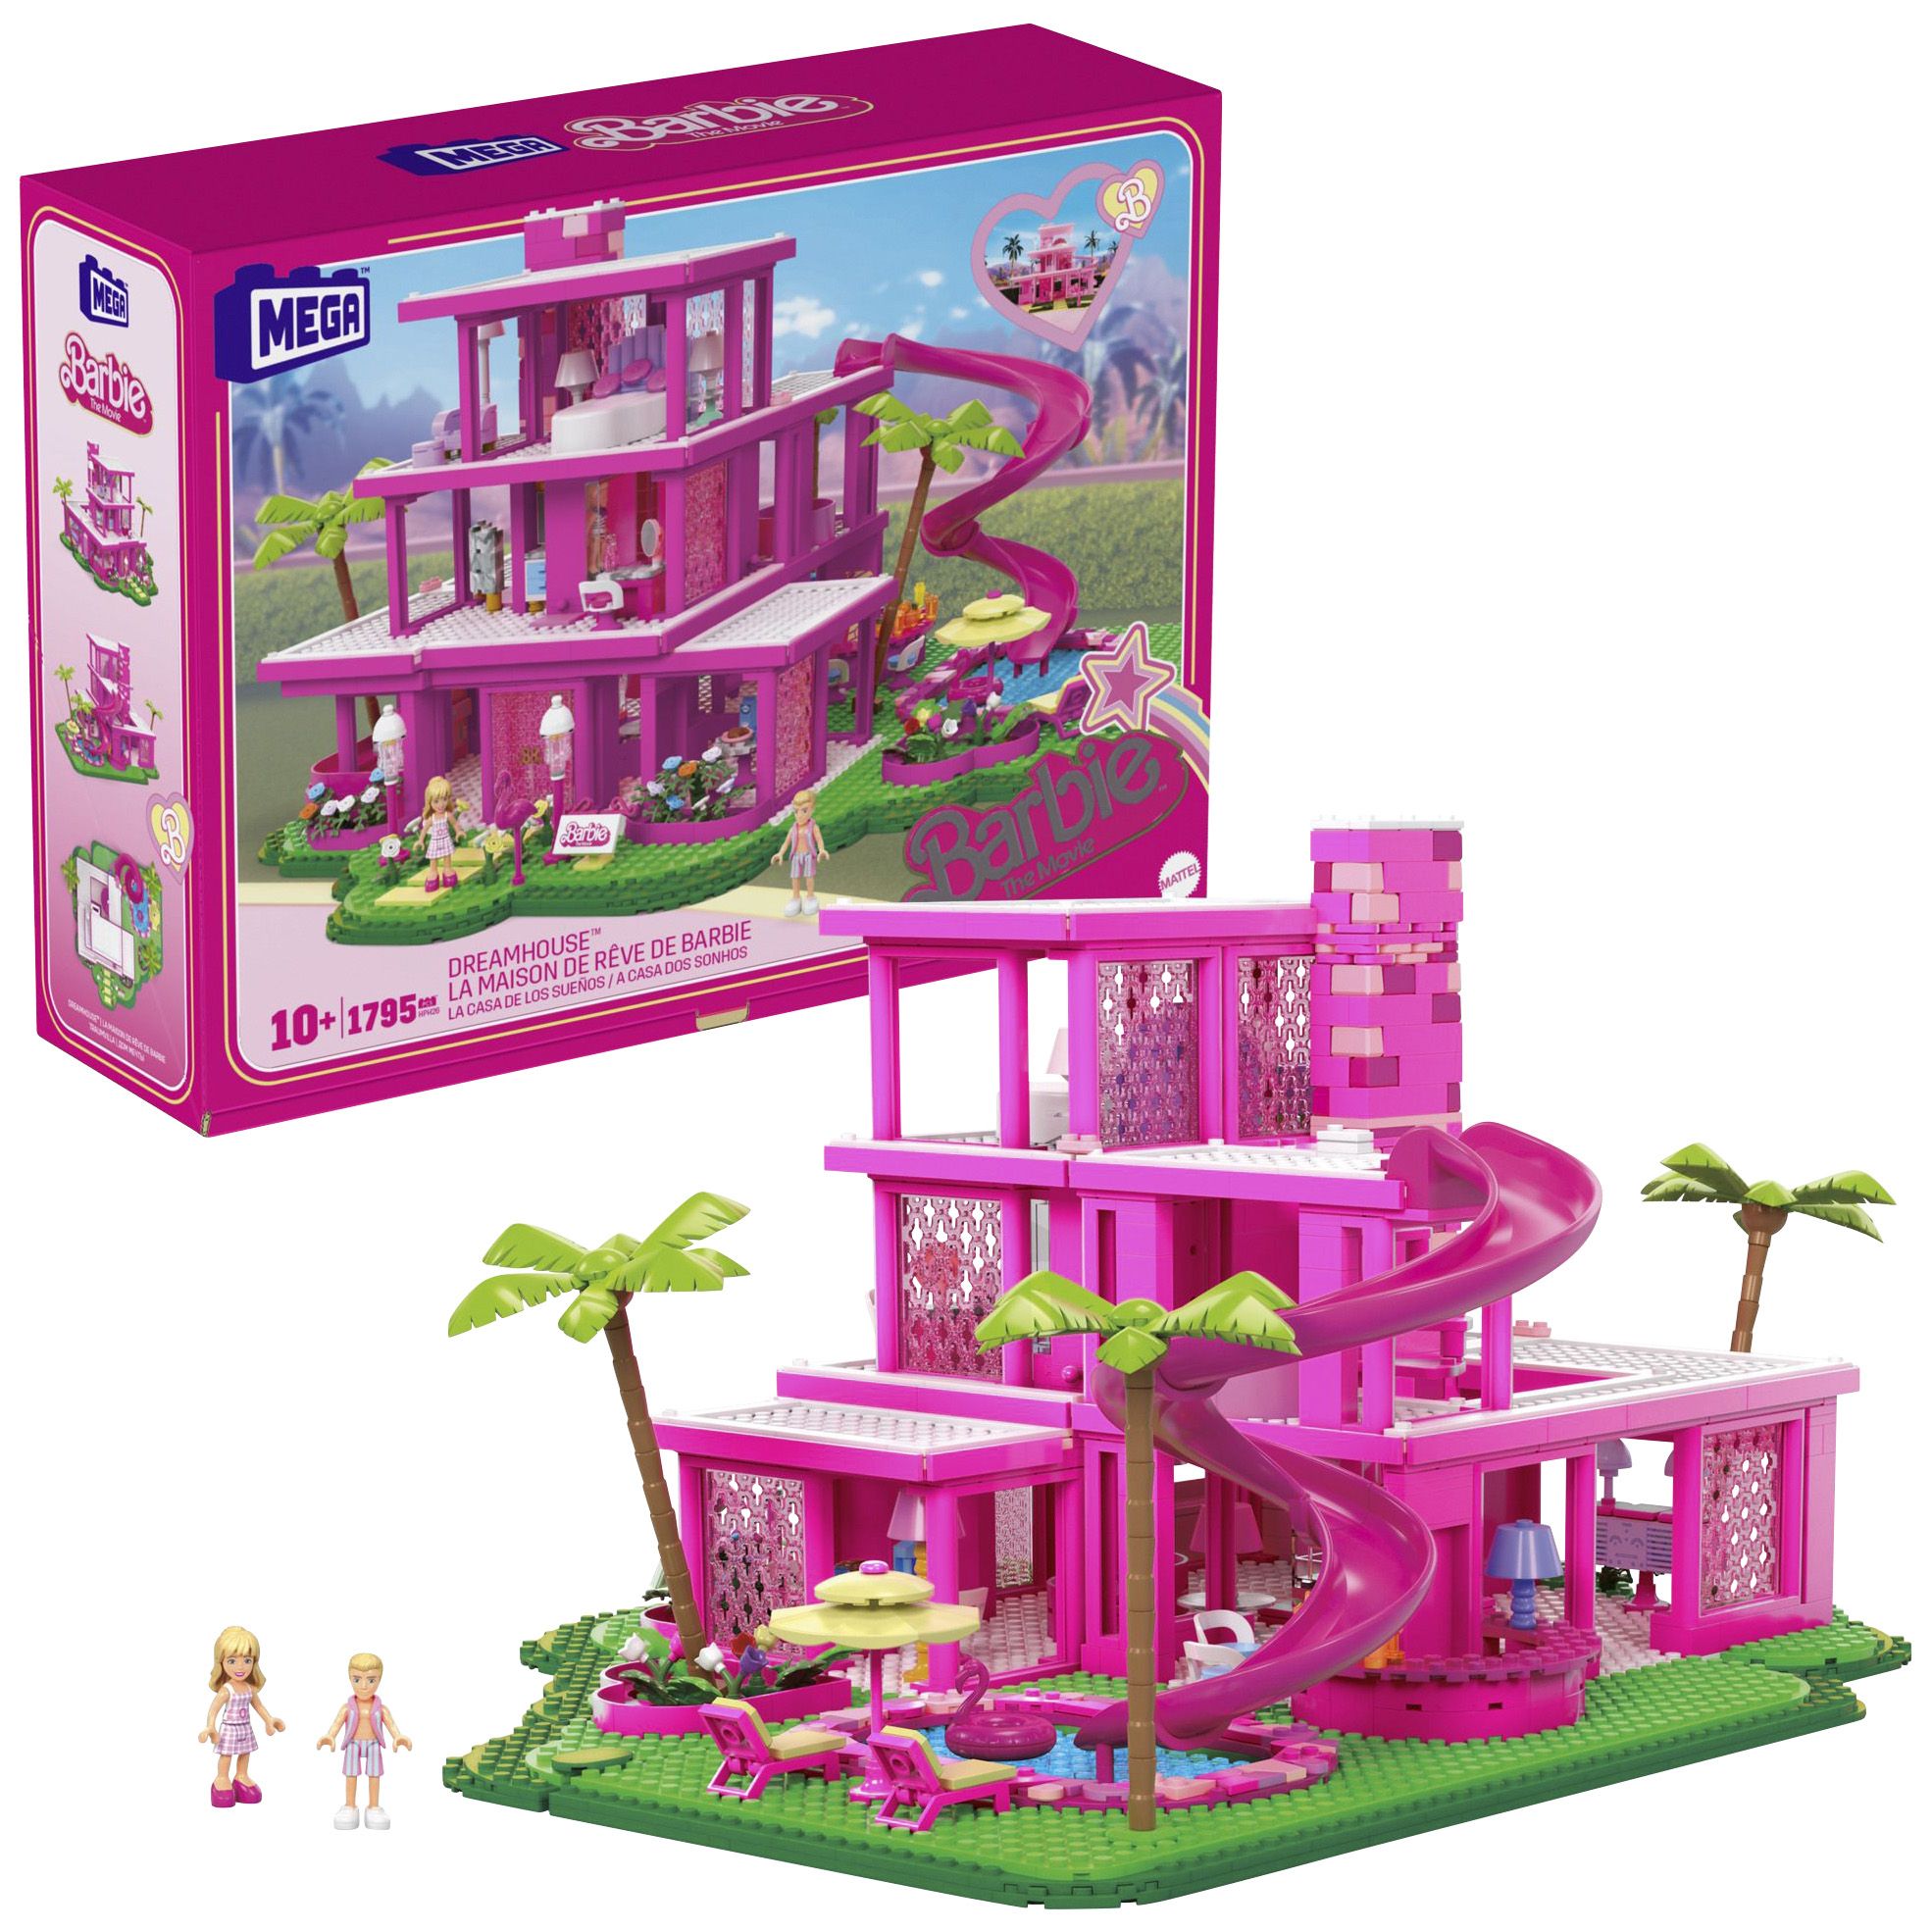 Barbie Dollhouse Collection - My Full Barbie Dreamhouse Toys